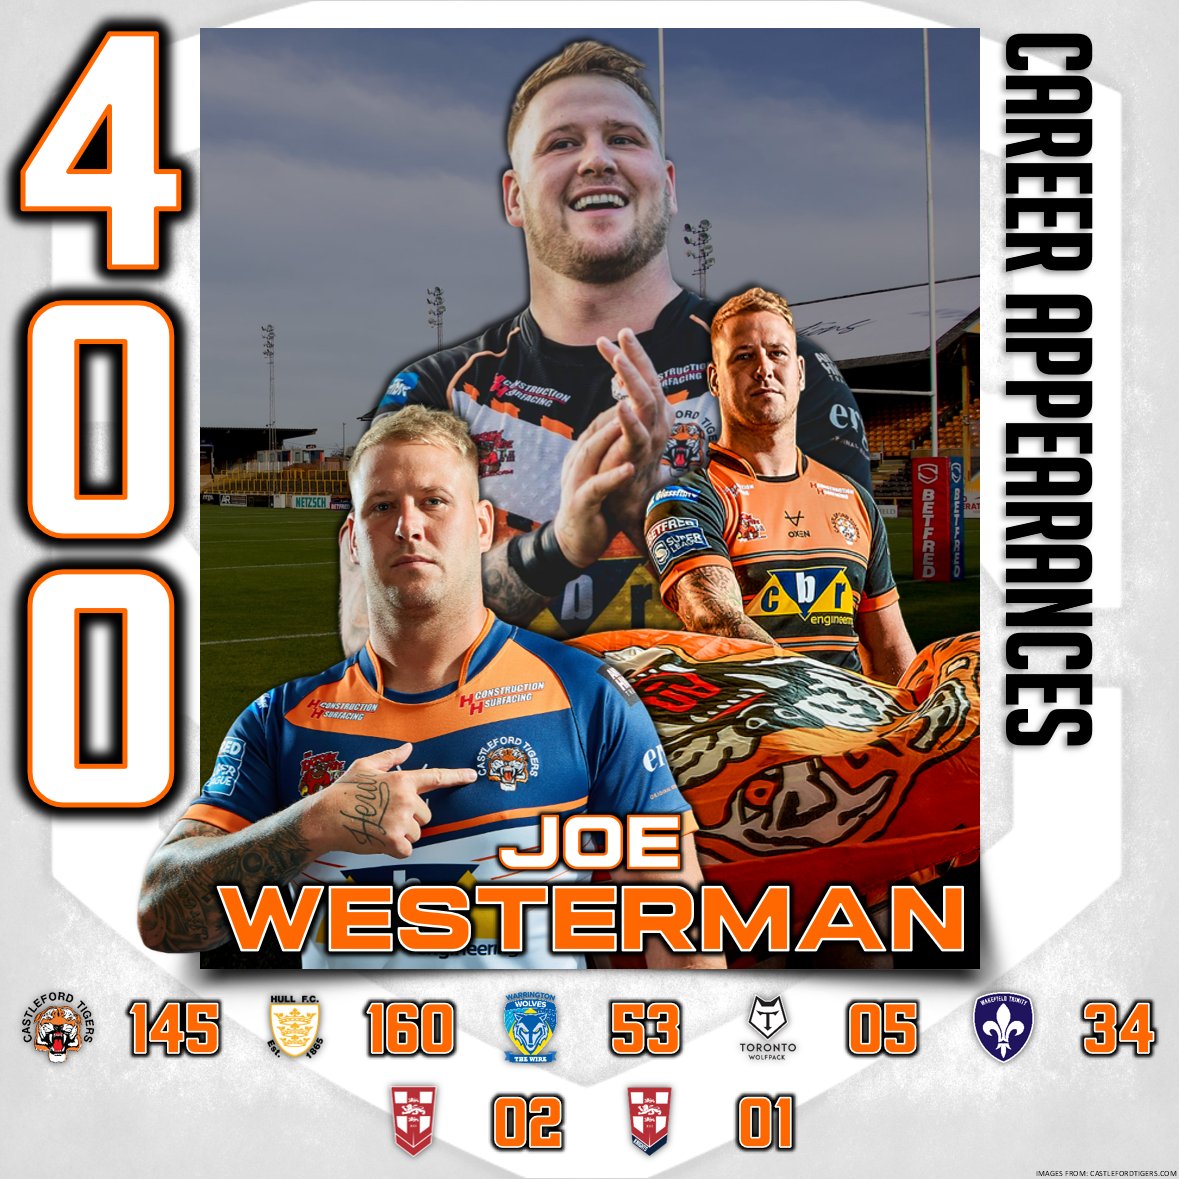 CAREER MILESTONE FOR WESTY

Tonight's match against Leeds Rhinos is Joe Westerman 400th career appearances.

👏Congratulations Westy

#COYF